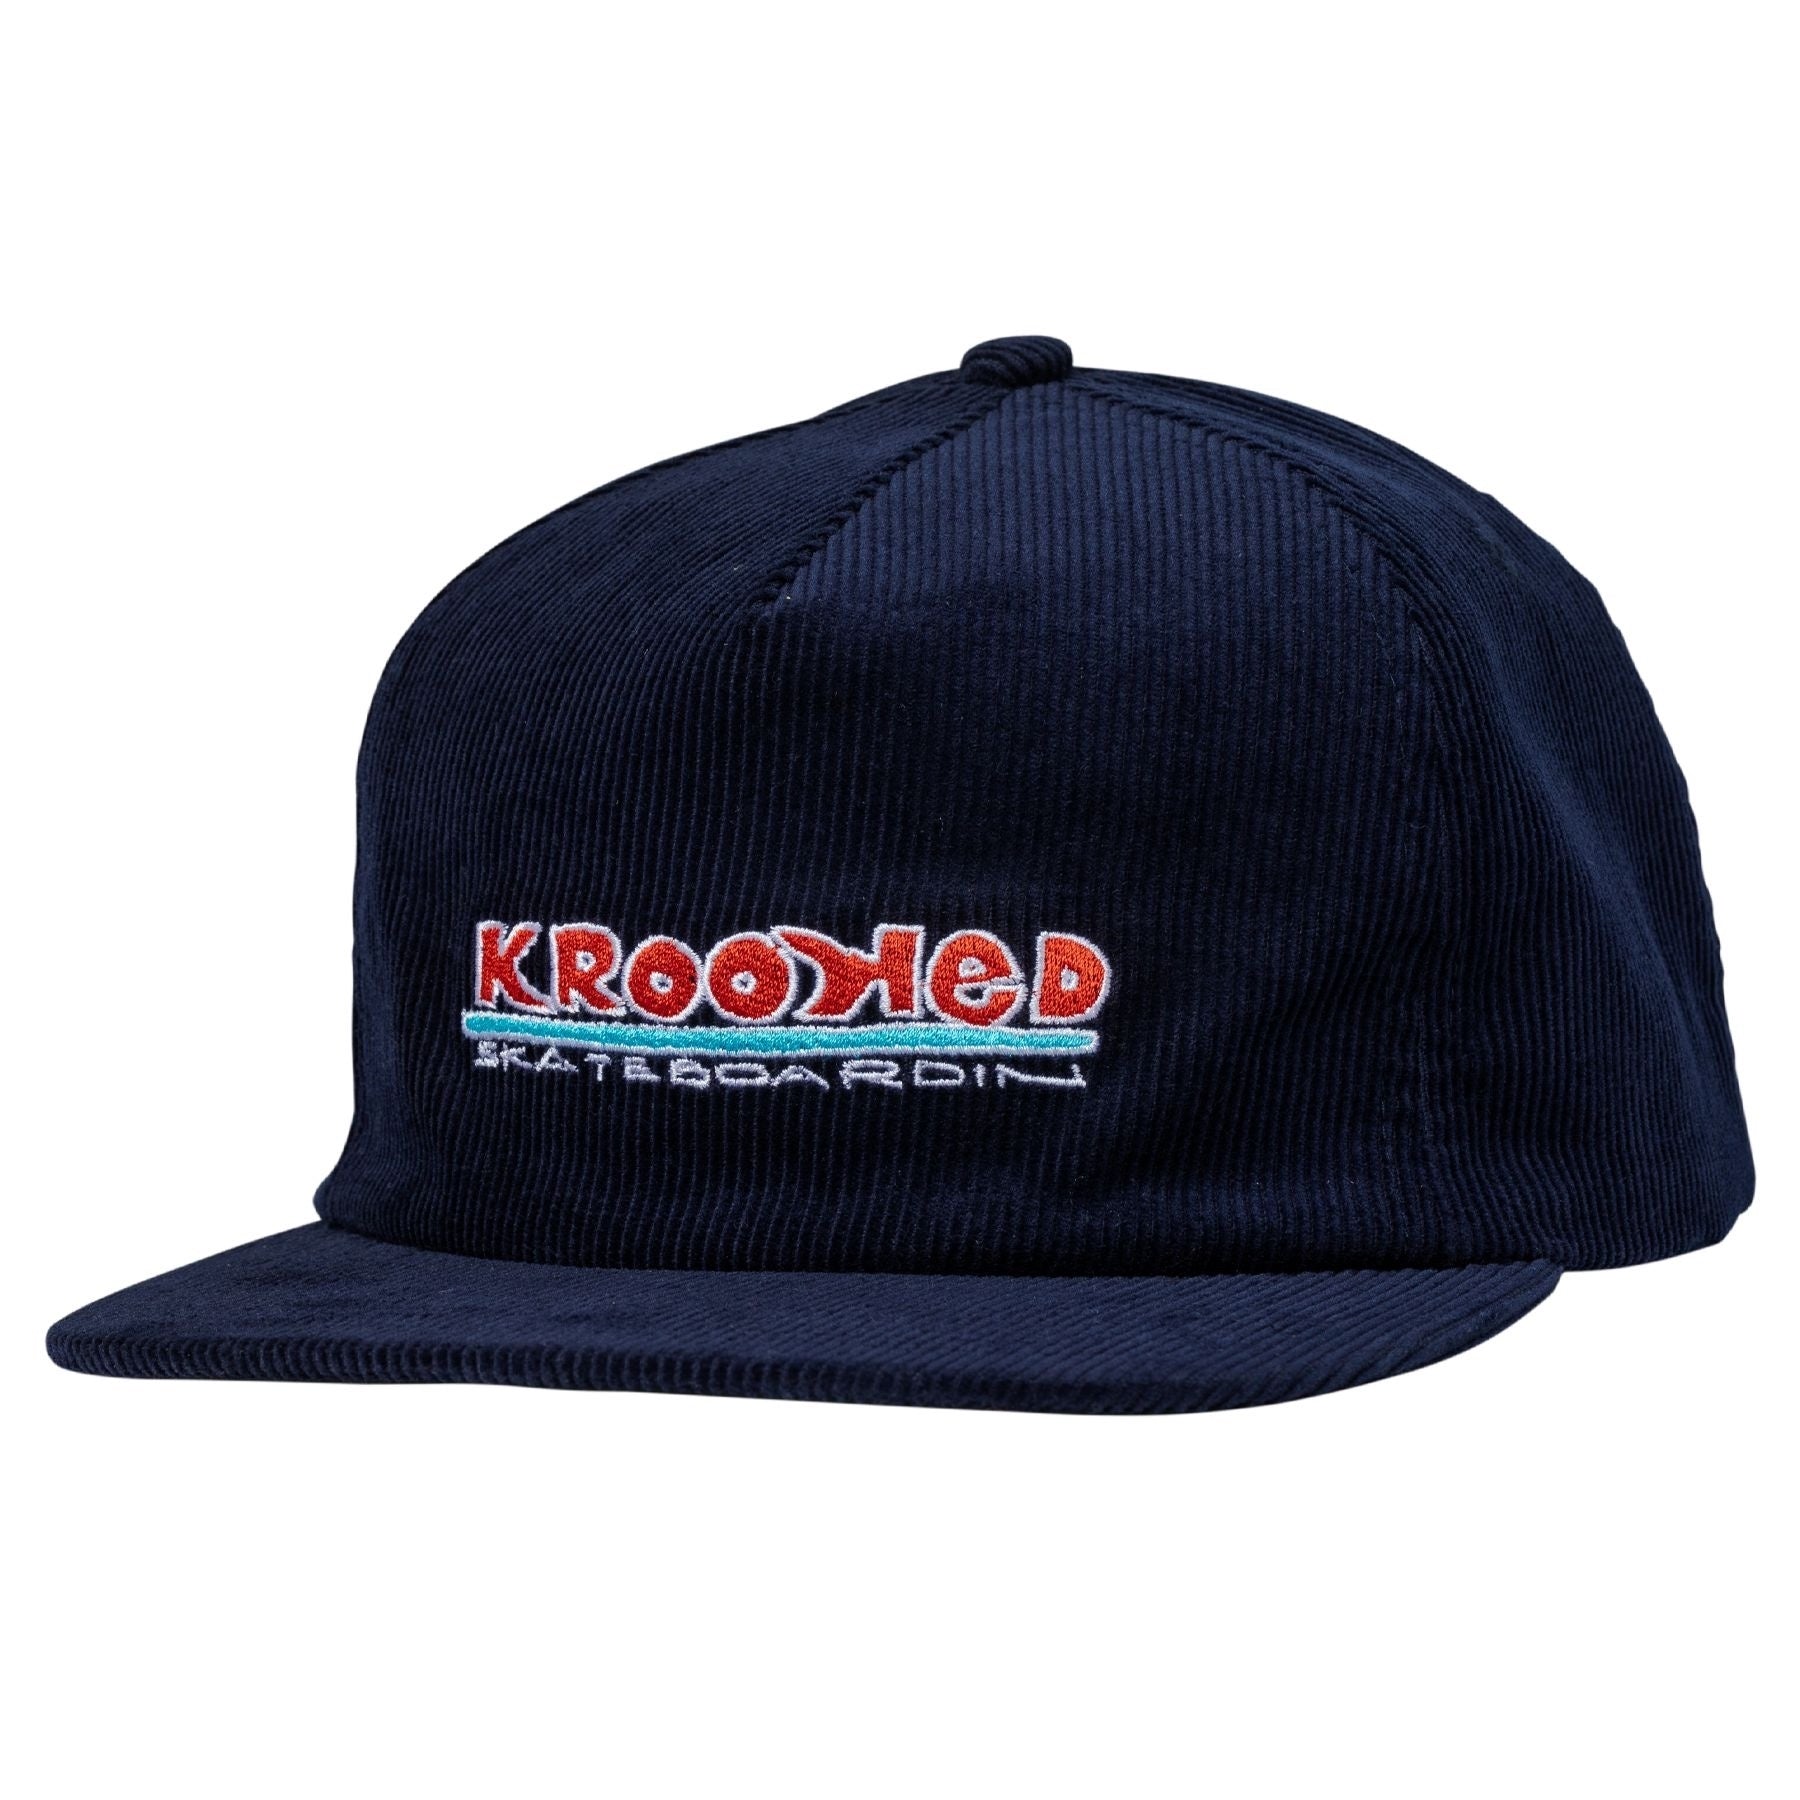 Krooked Skateboardin Adjustable Snapback Corduroy Hat (Navy) - Apple Valley Emporium